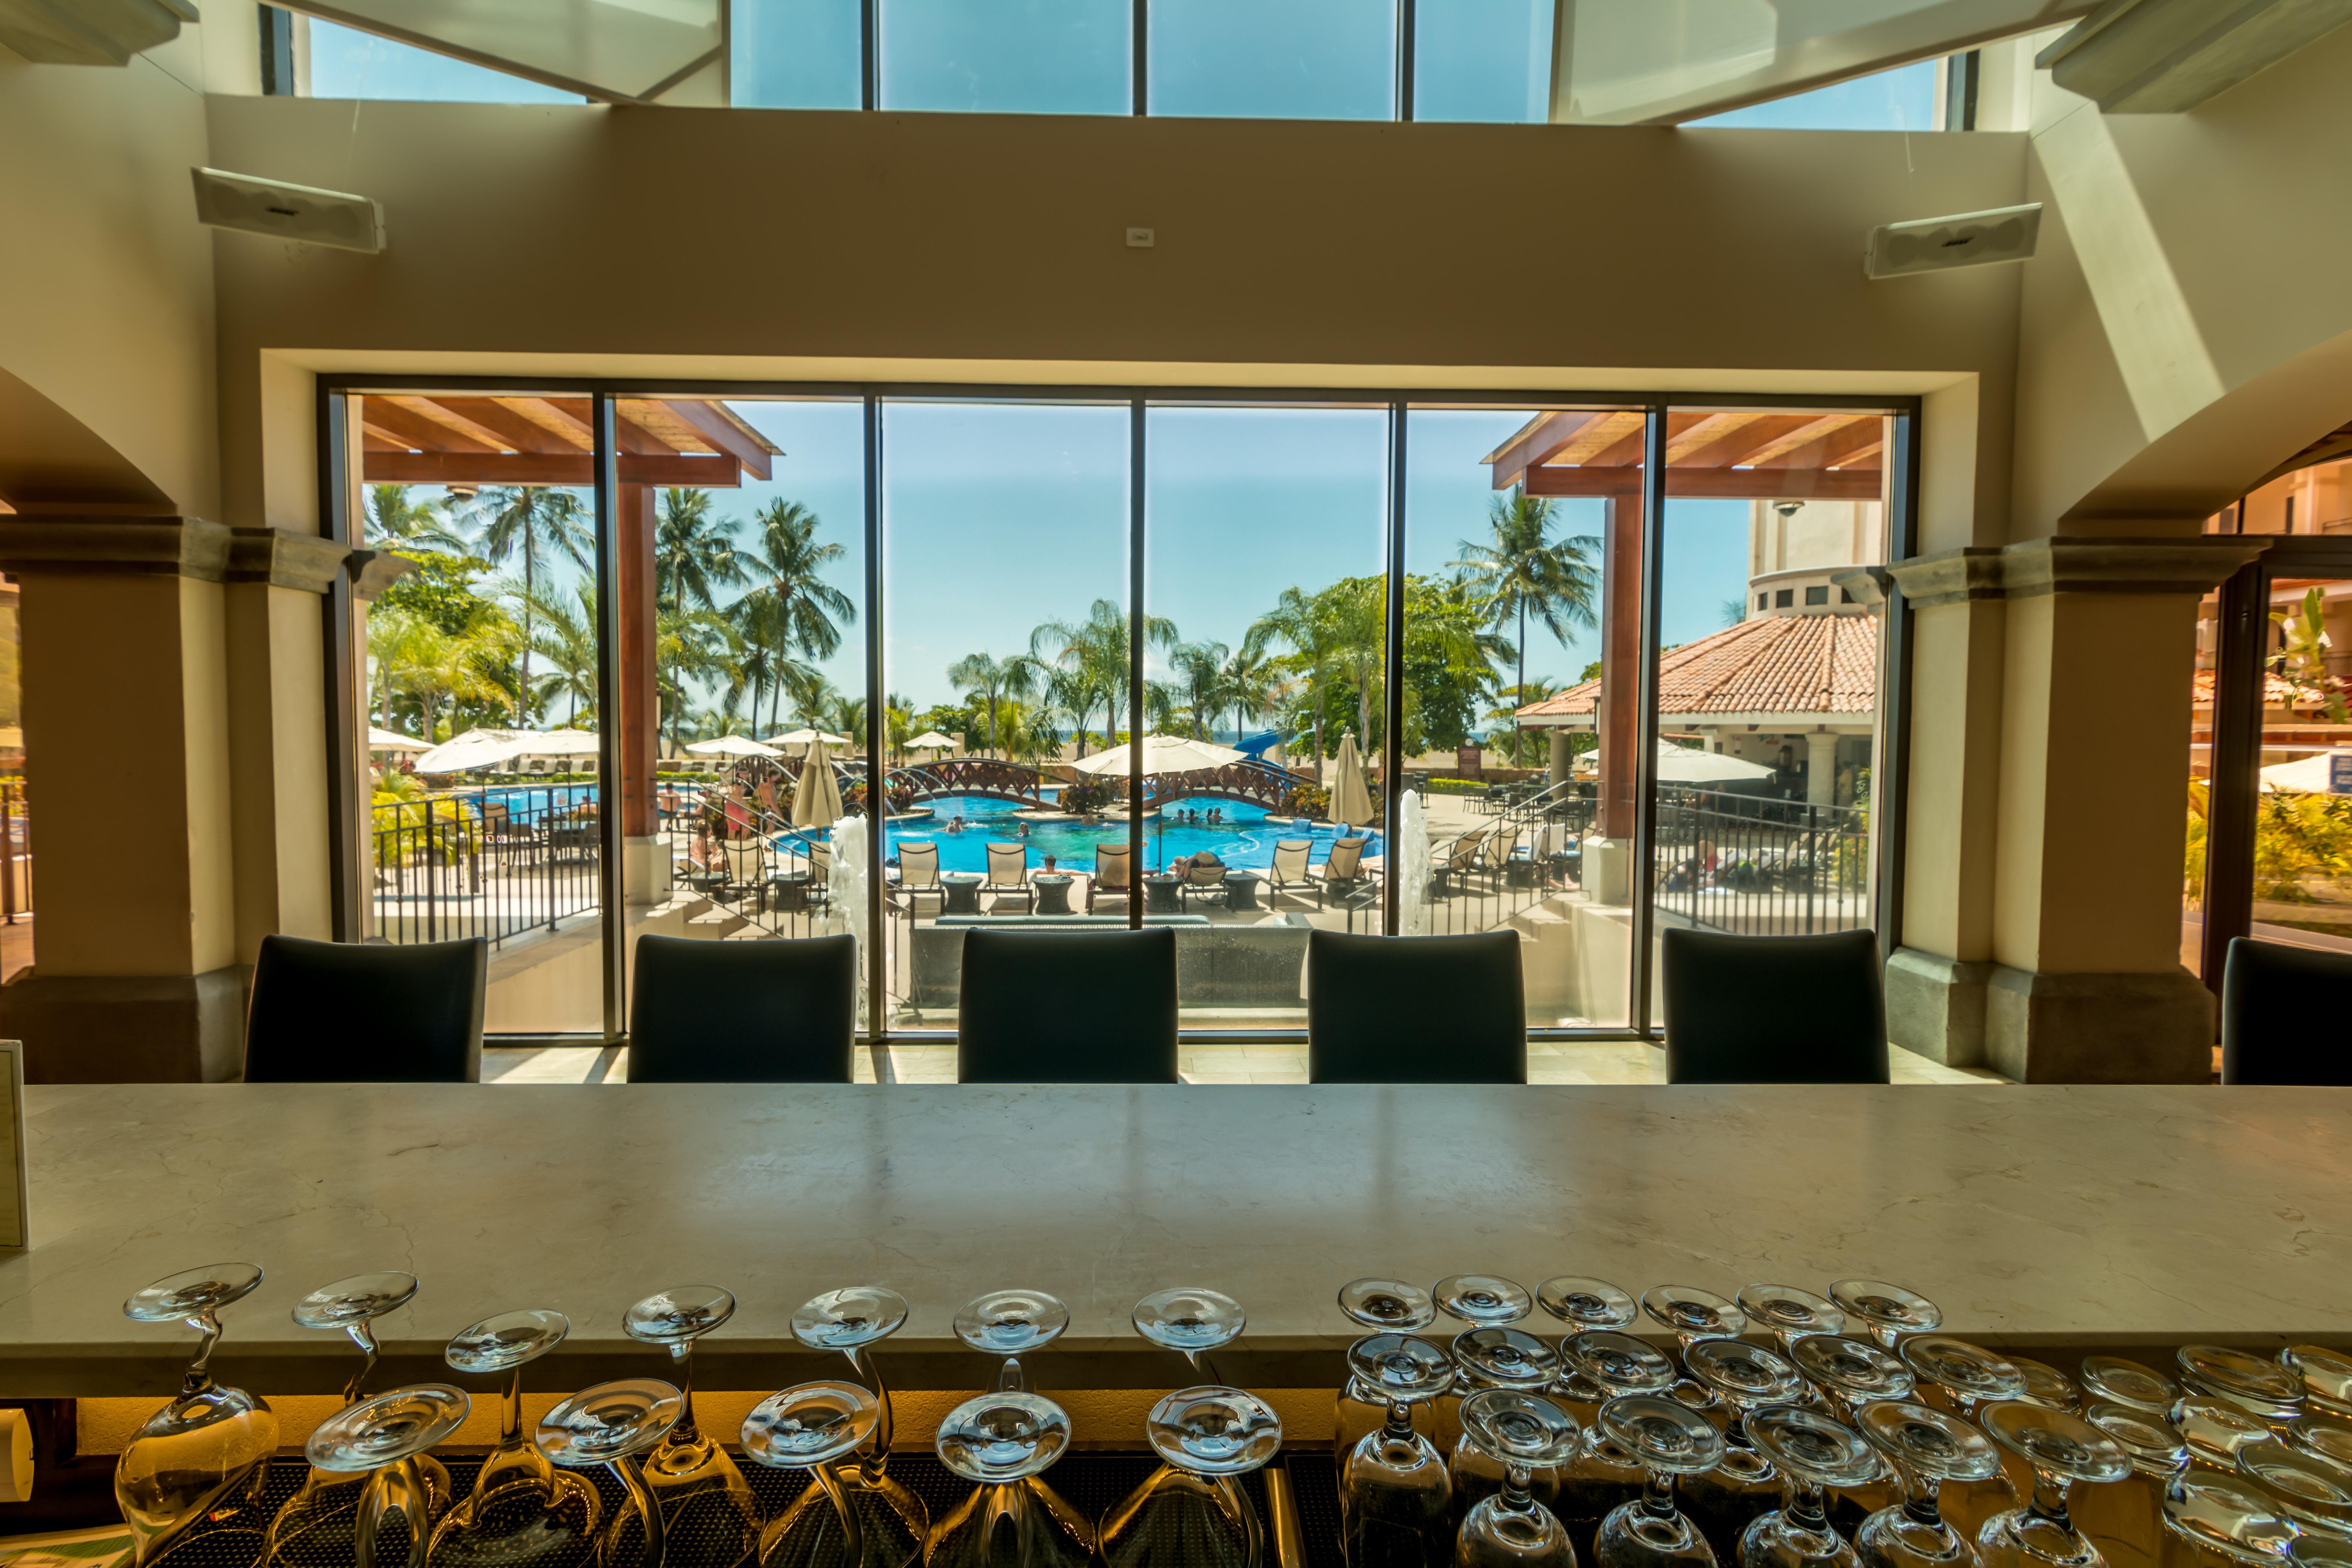 Crocs Resort & Casino Jaco Exterior photo